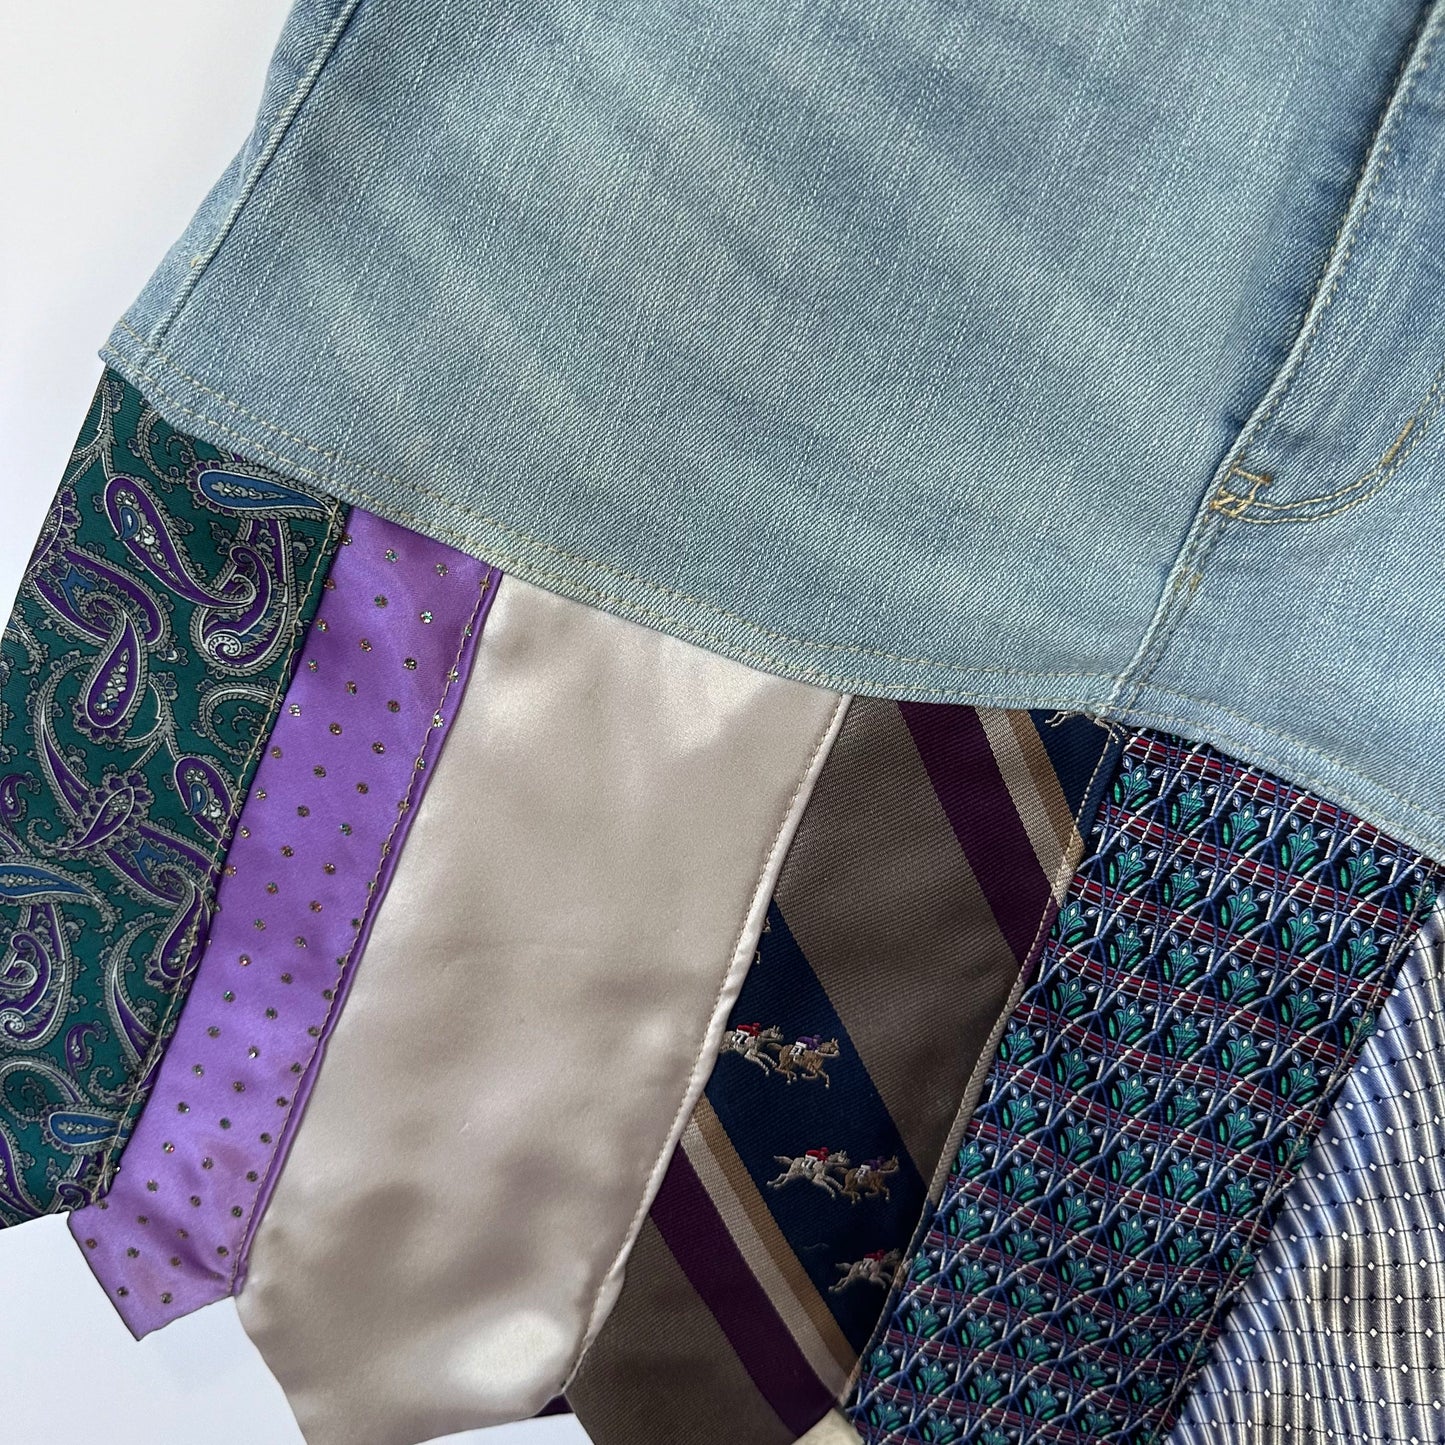 distress denim meets purple power tie skirt, (size 5)